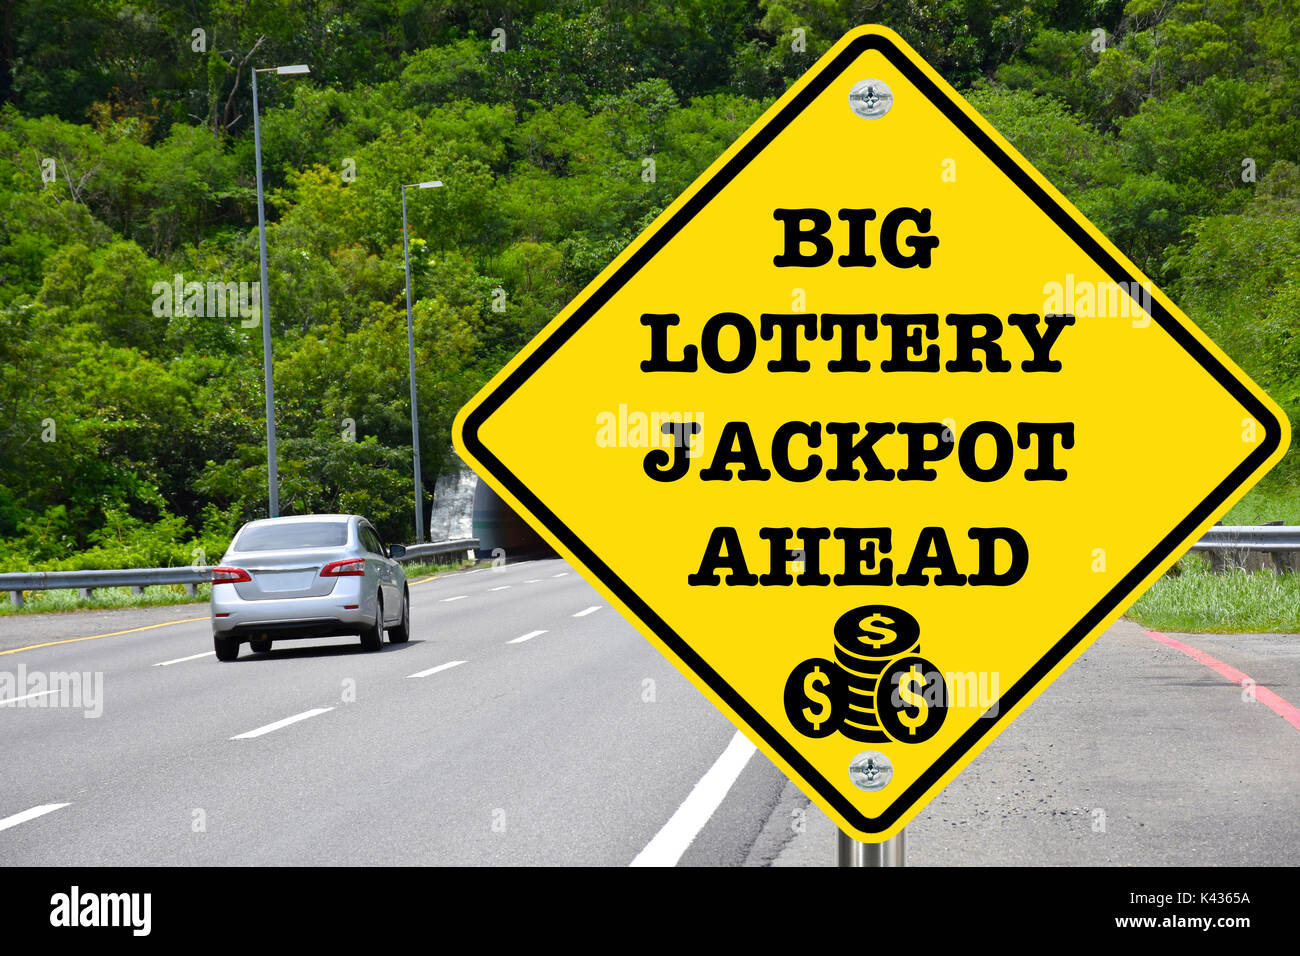 Big lottery jackpot ahead, yellow warning road sign Stock Photo